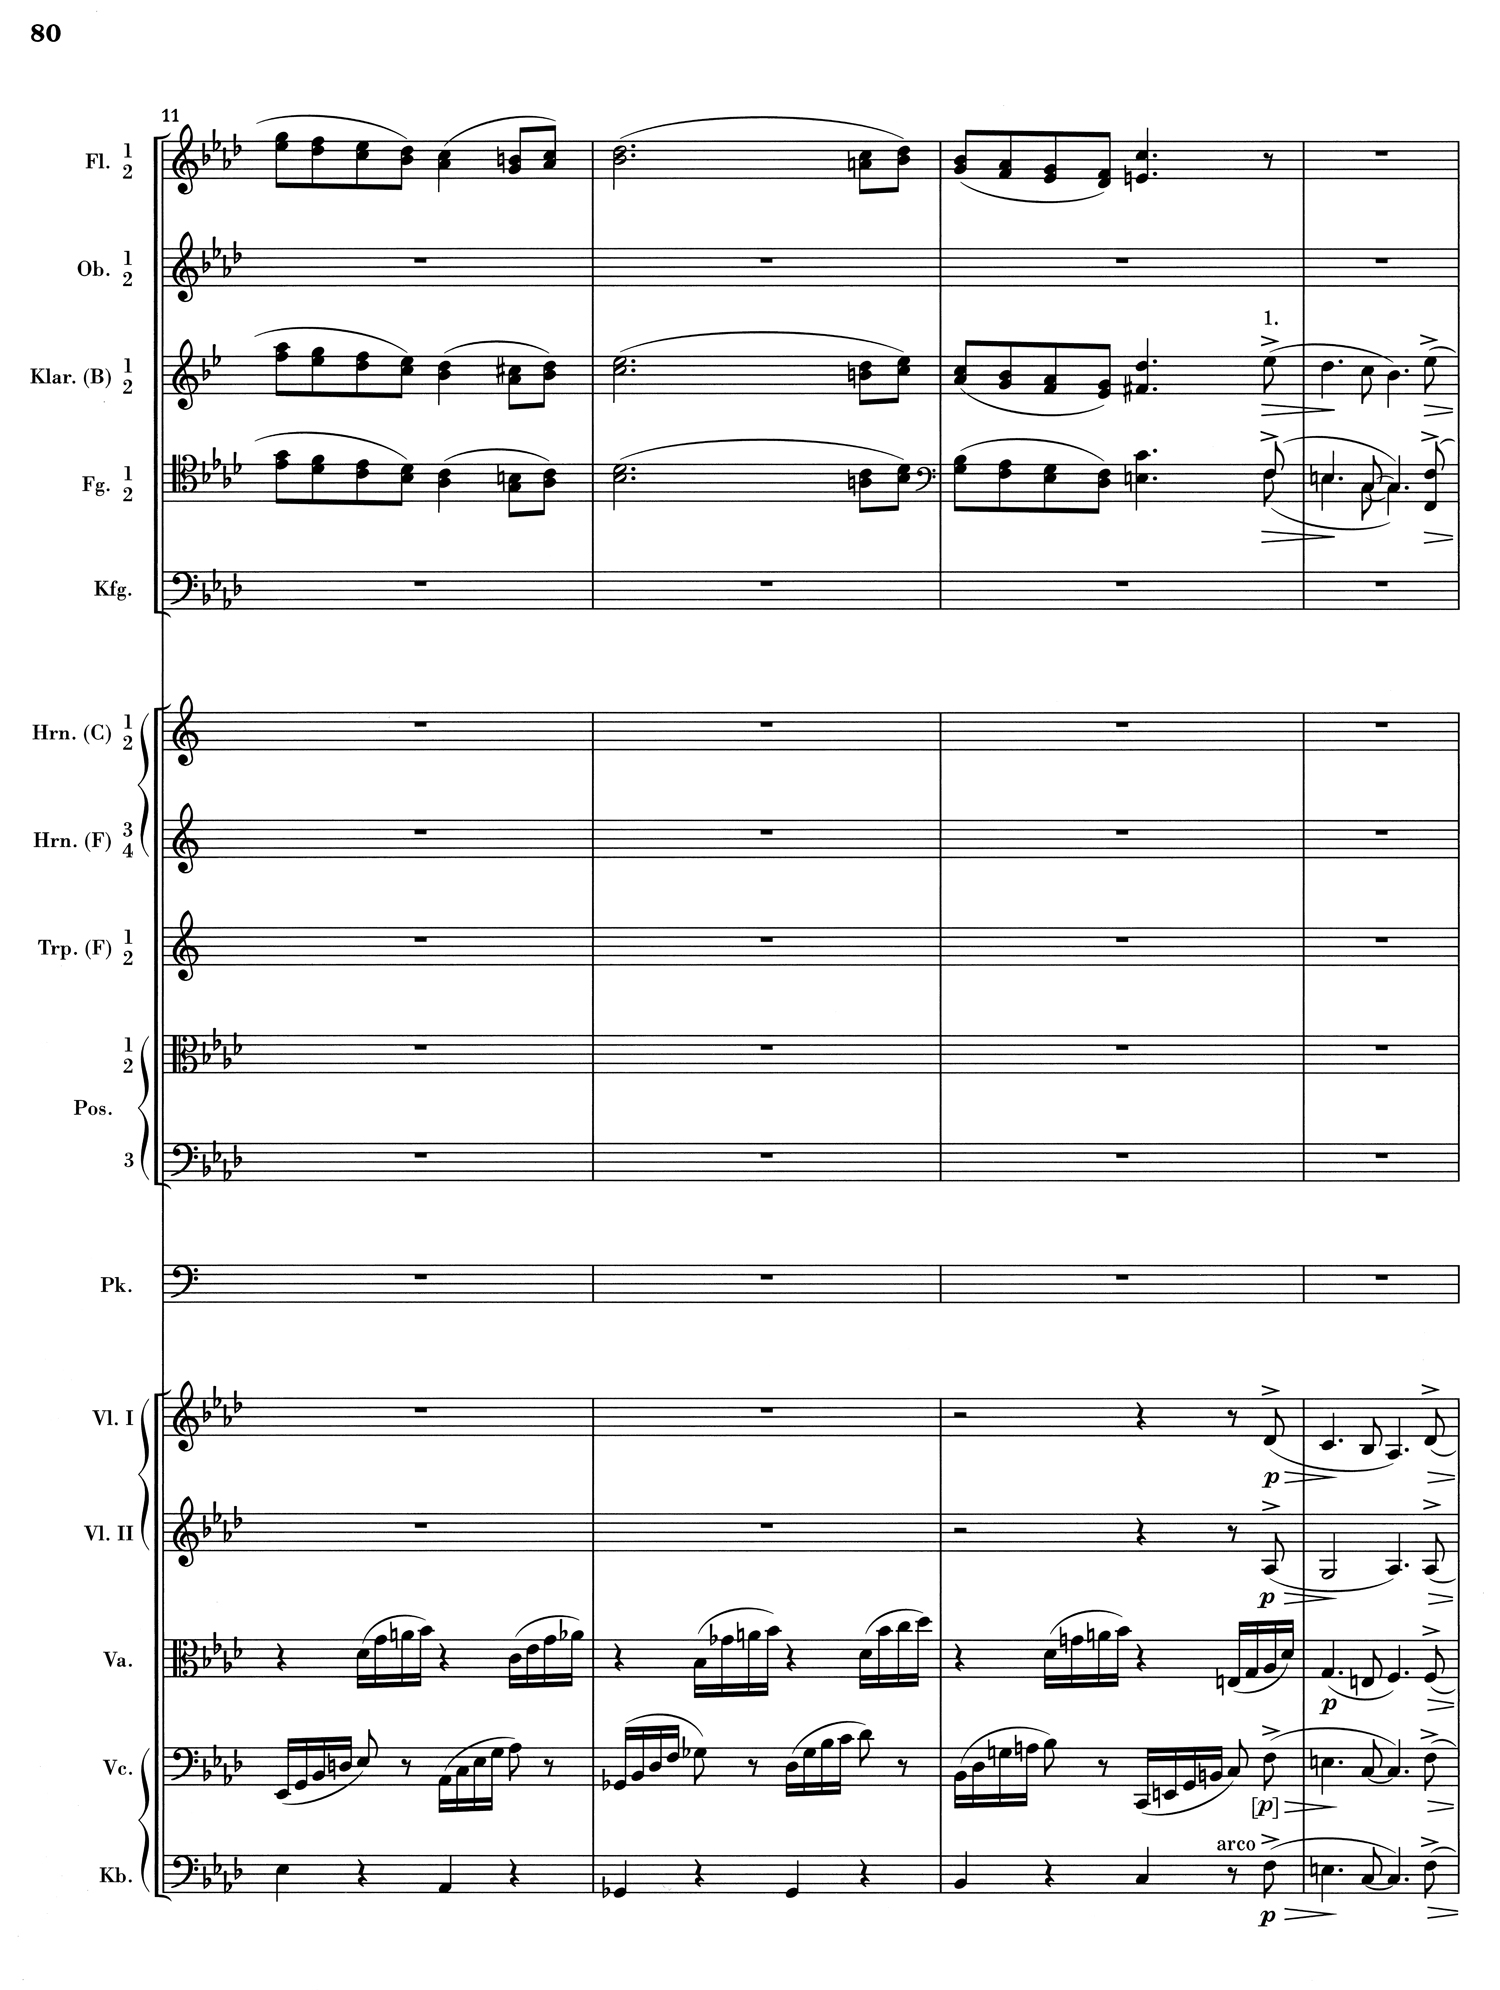 Brahms 3 Score 9.jpg